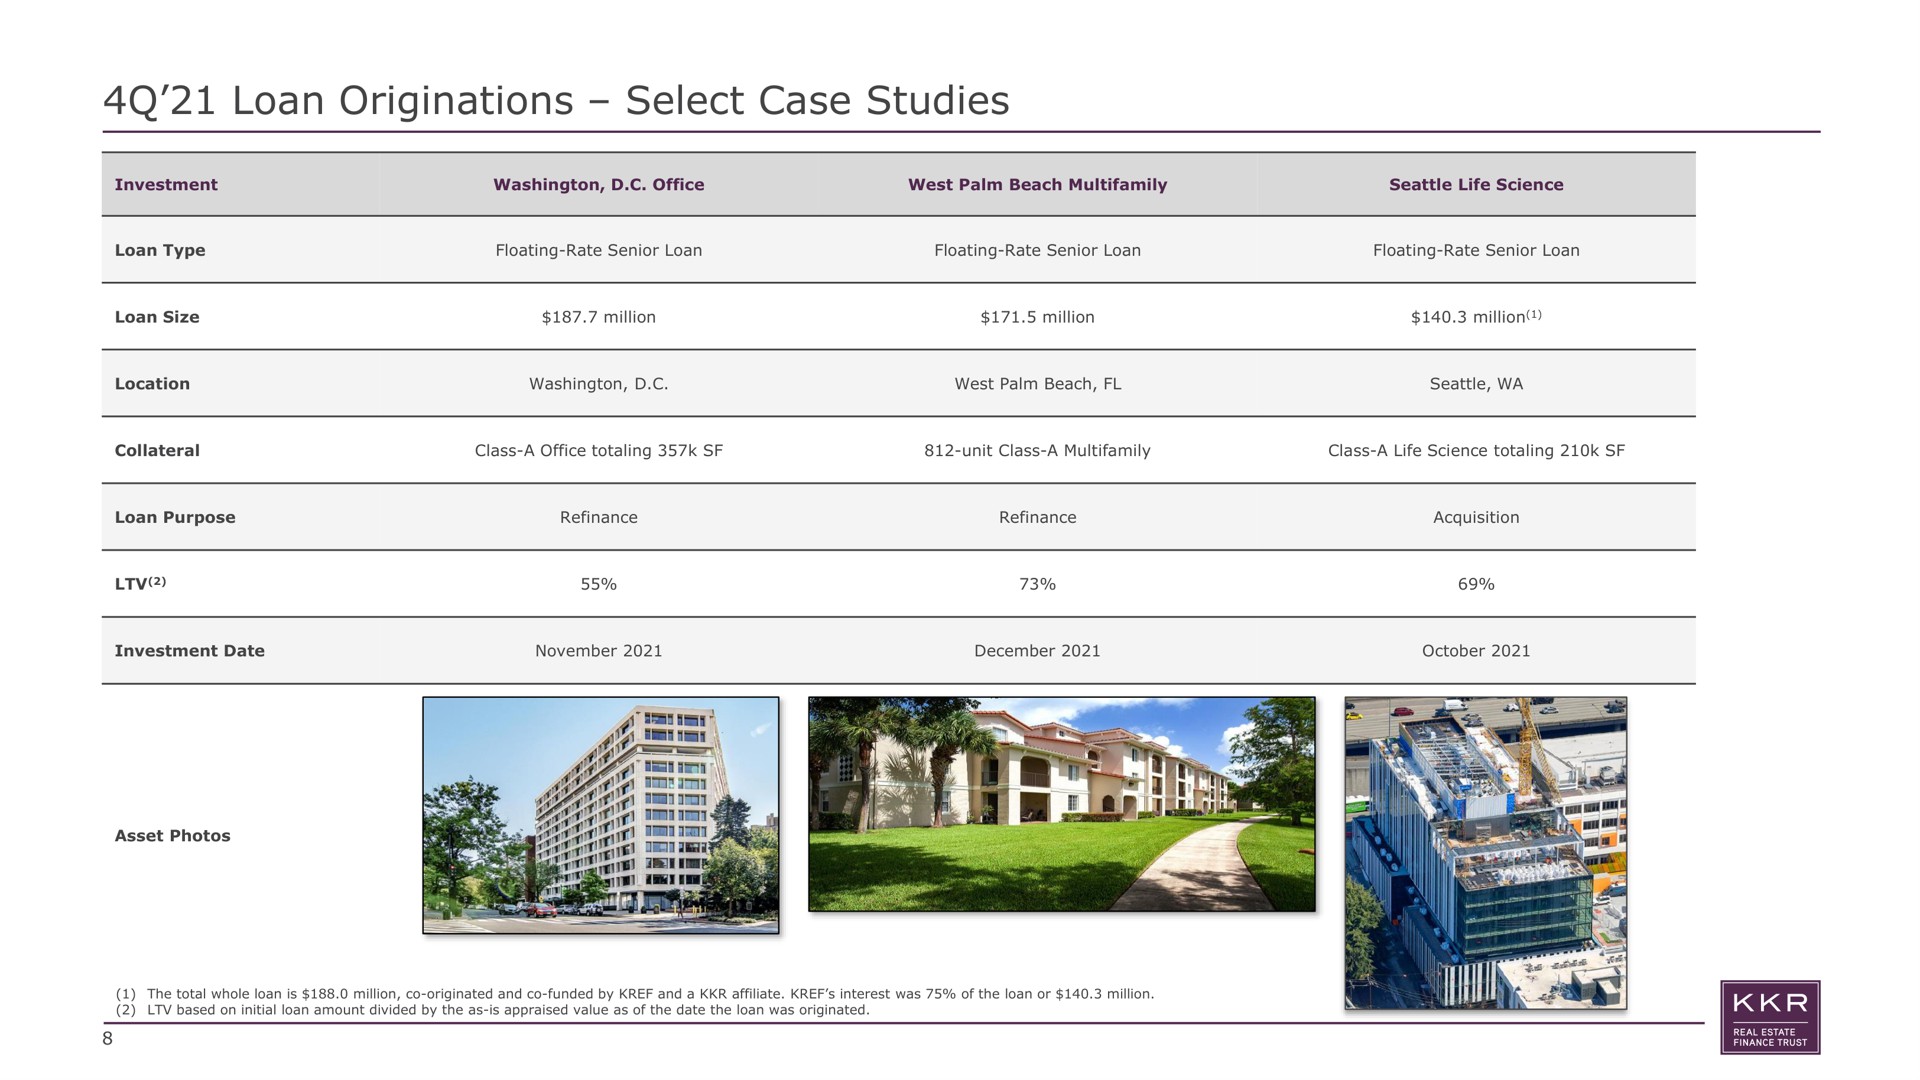 loan originations select case studies | KKR Real Estate Finance Trust